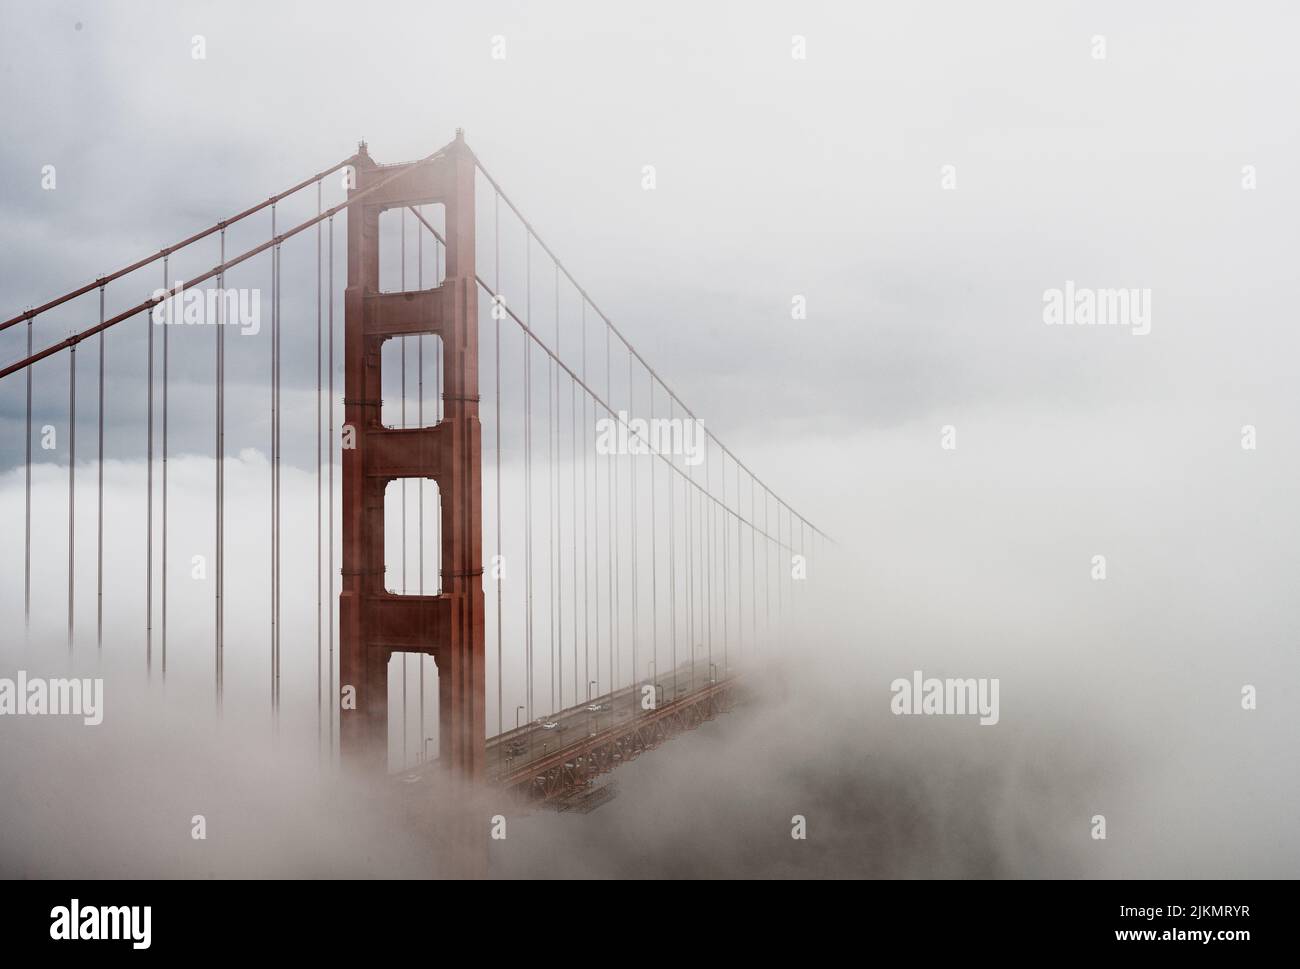 Architectural detail of the Golden Gate Bridge, San Francisco, California Stock Photo